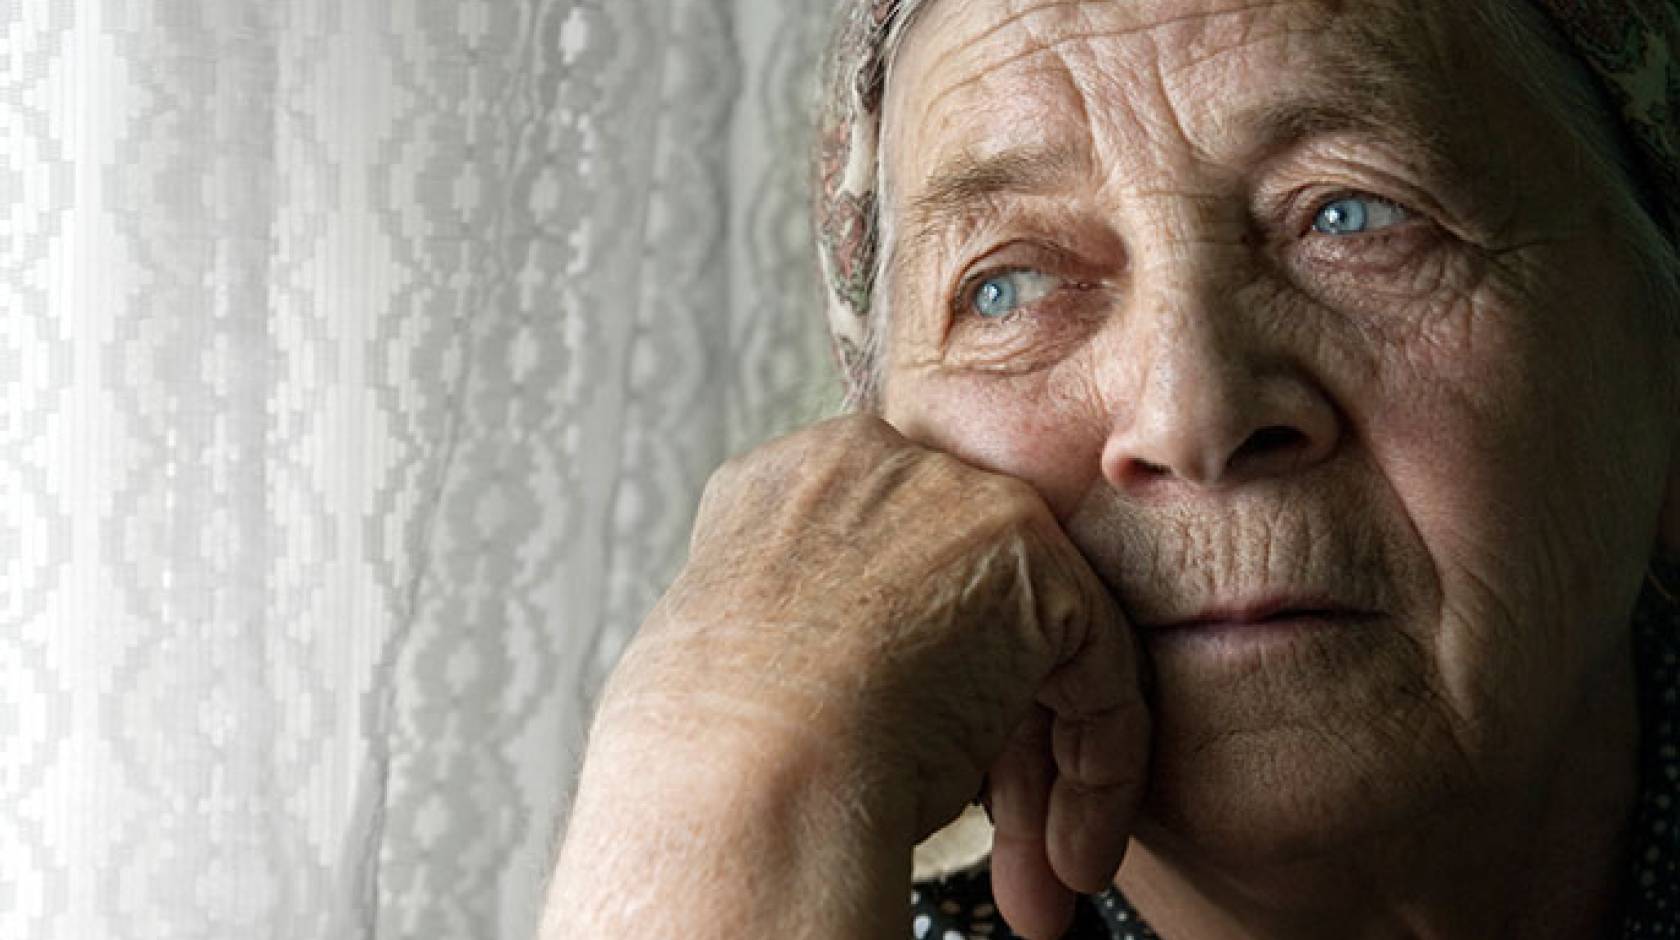 pensive elderly woman